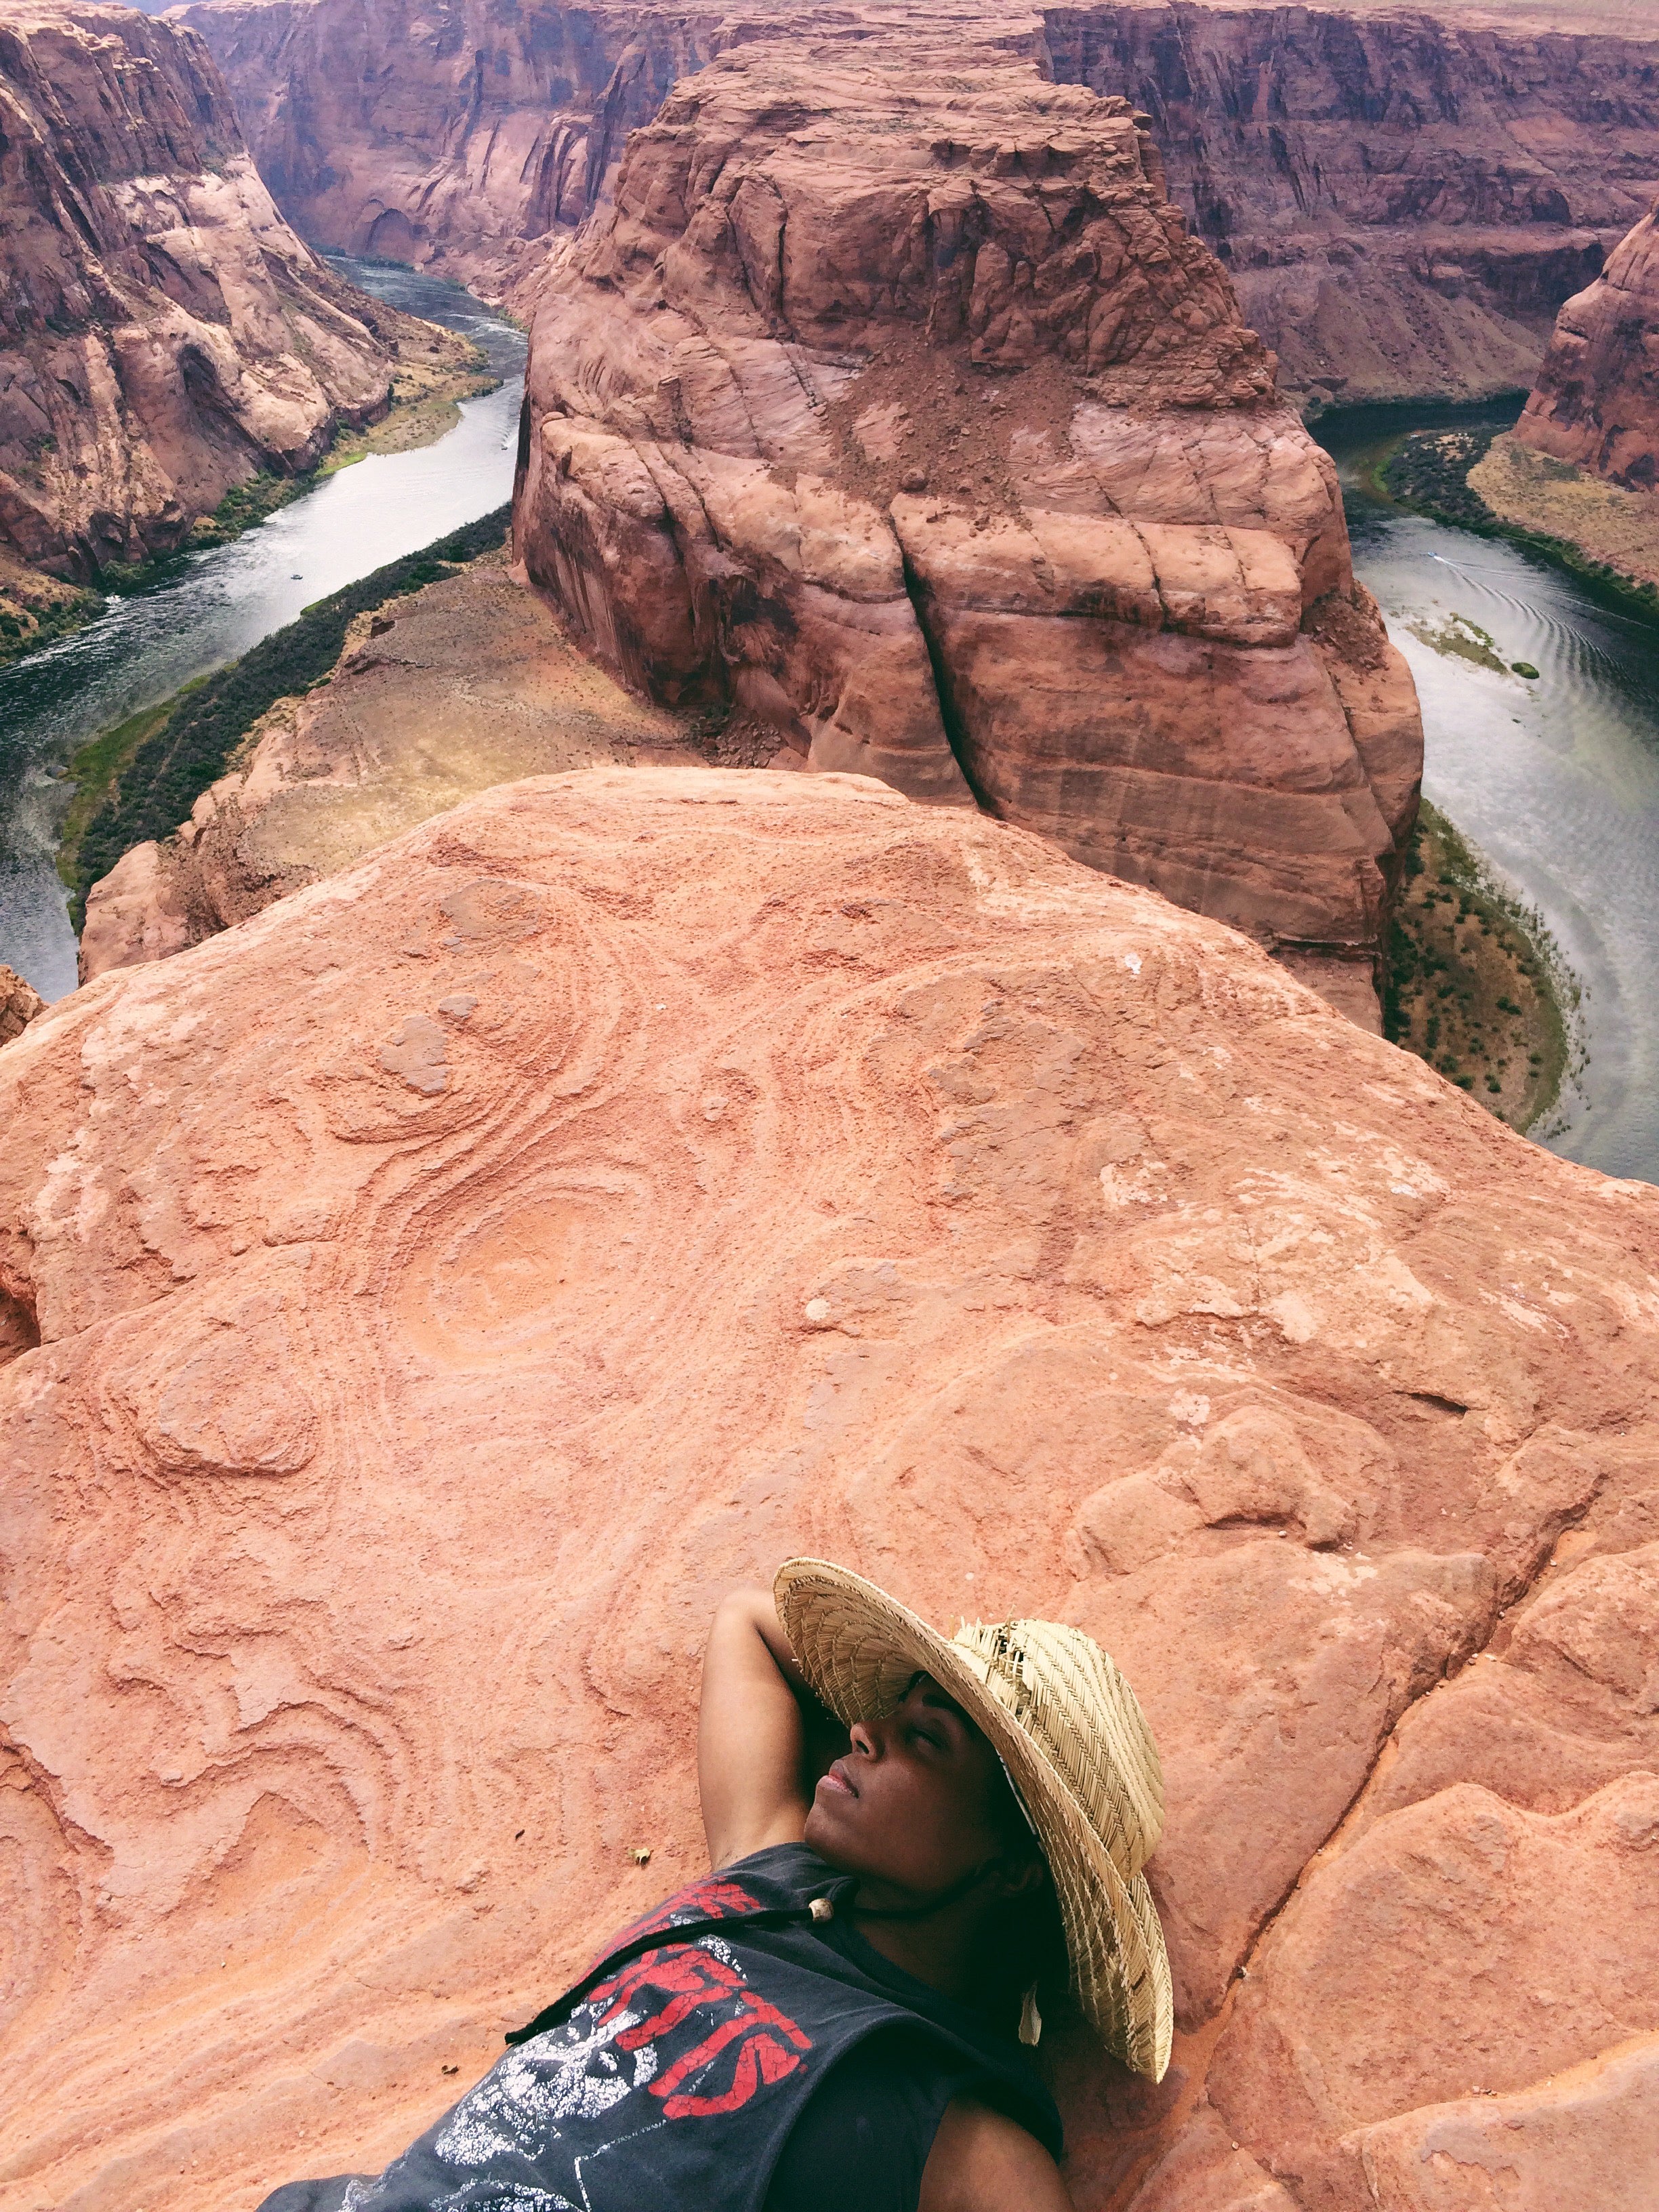 One Black Woman's Wild, Fabulous Hiking Adventure in Arizona
